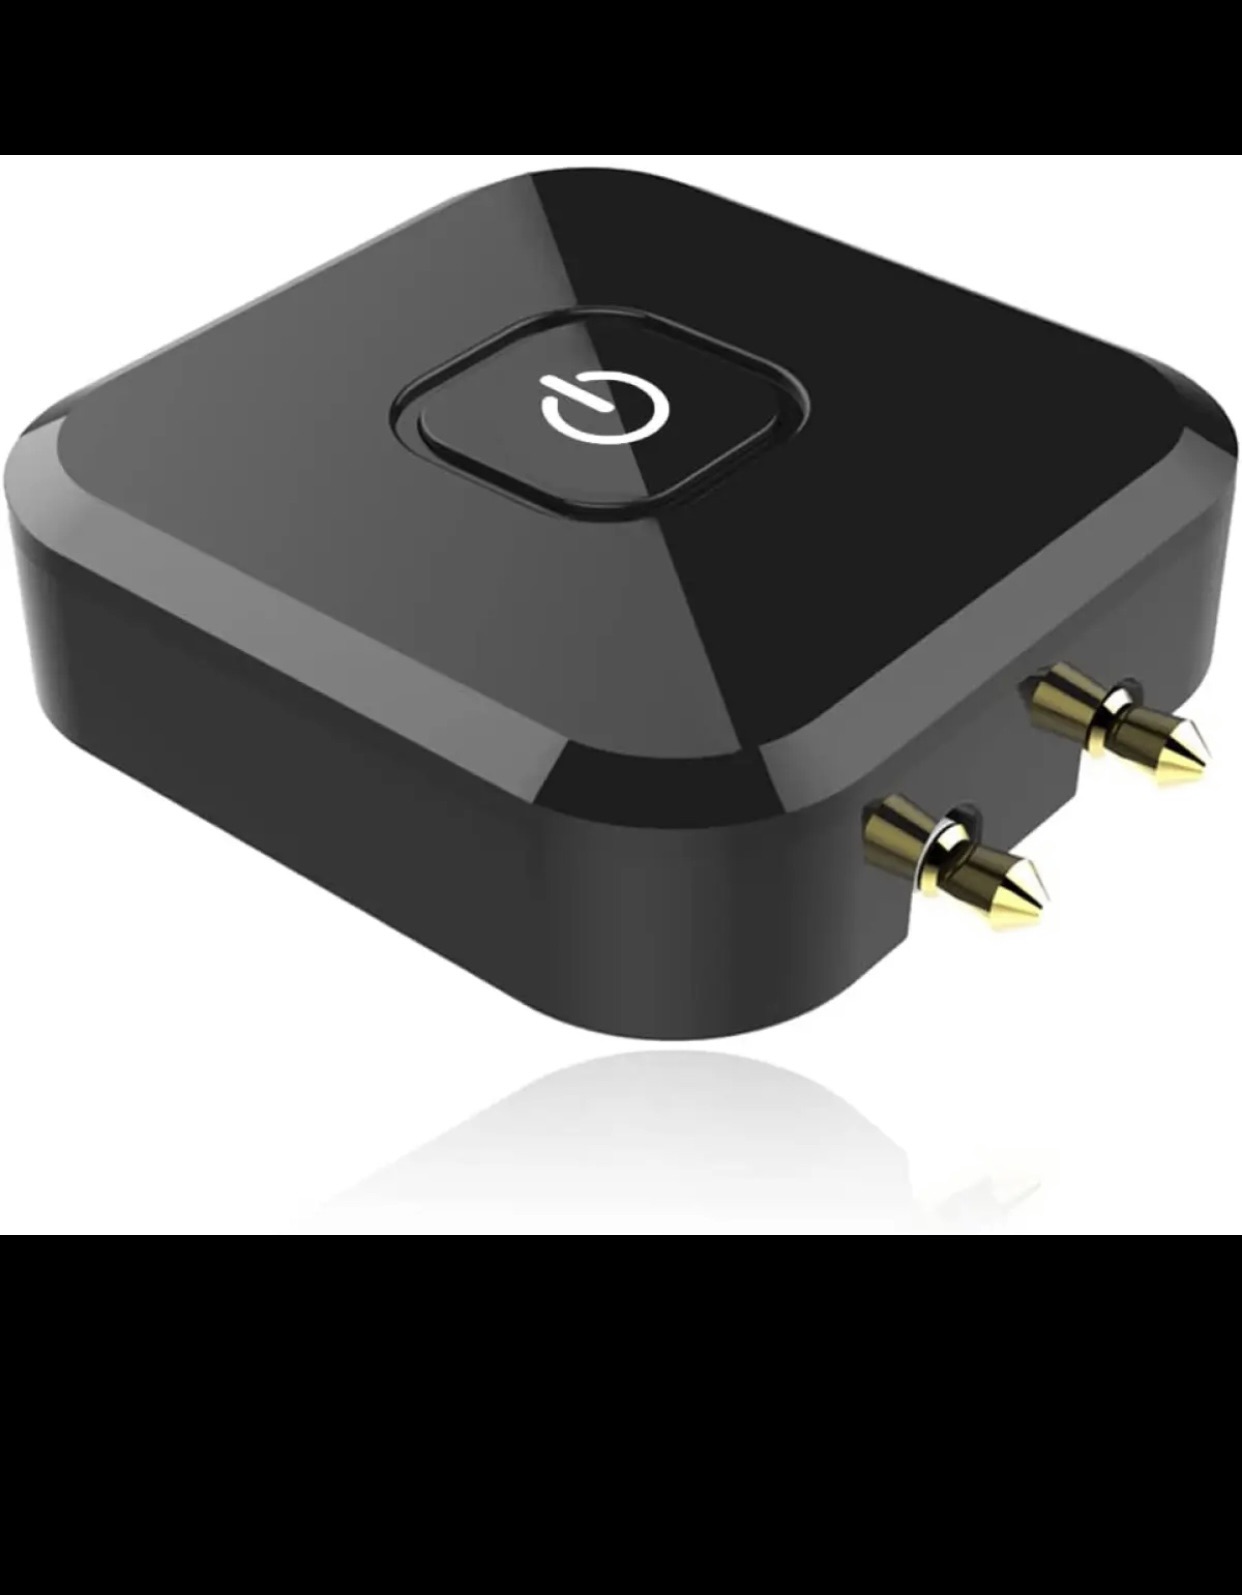 KingSom Upgraded Bluetooth 5.0 Transmitter Adapter for TV